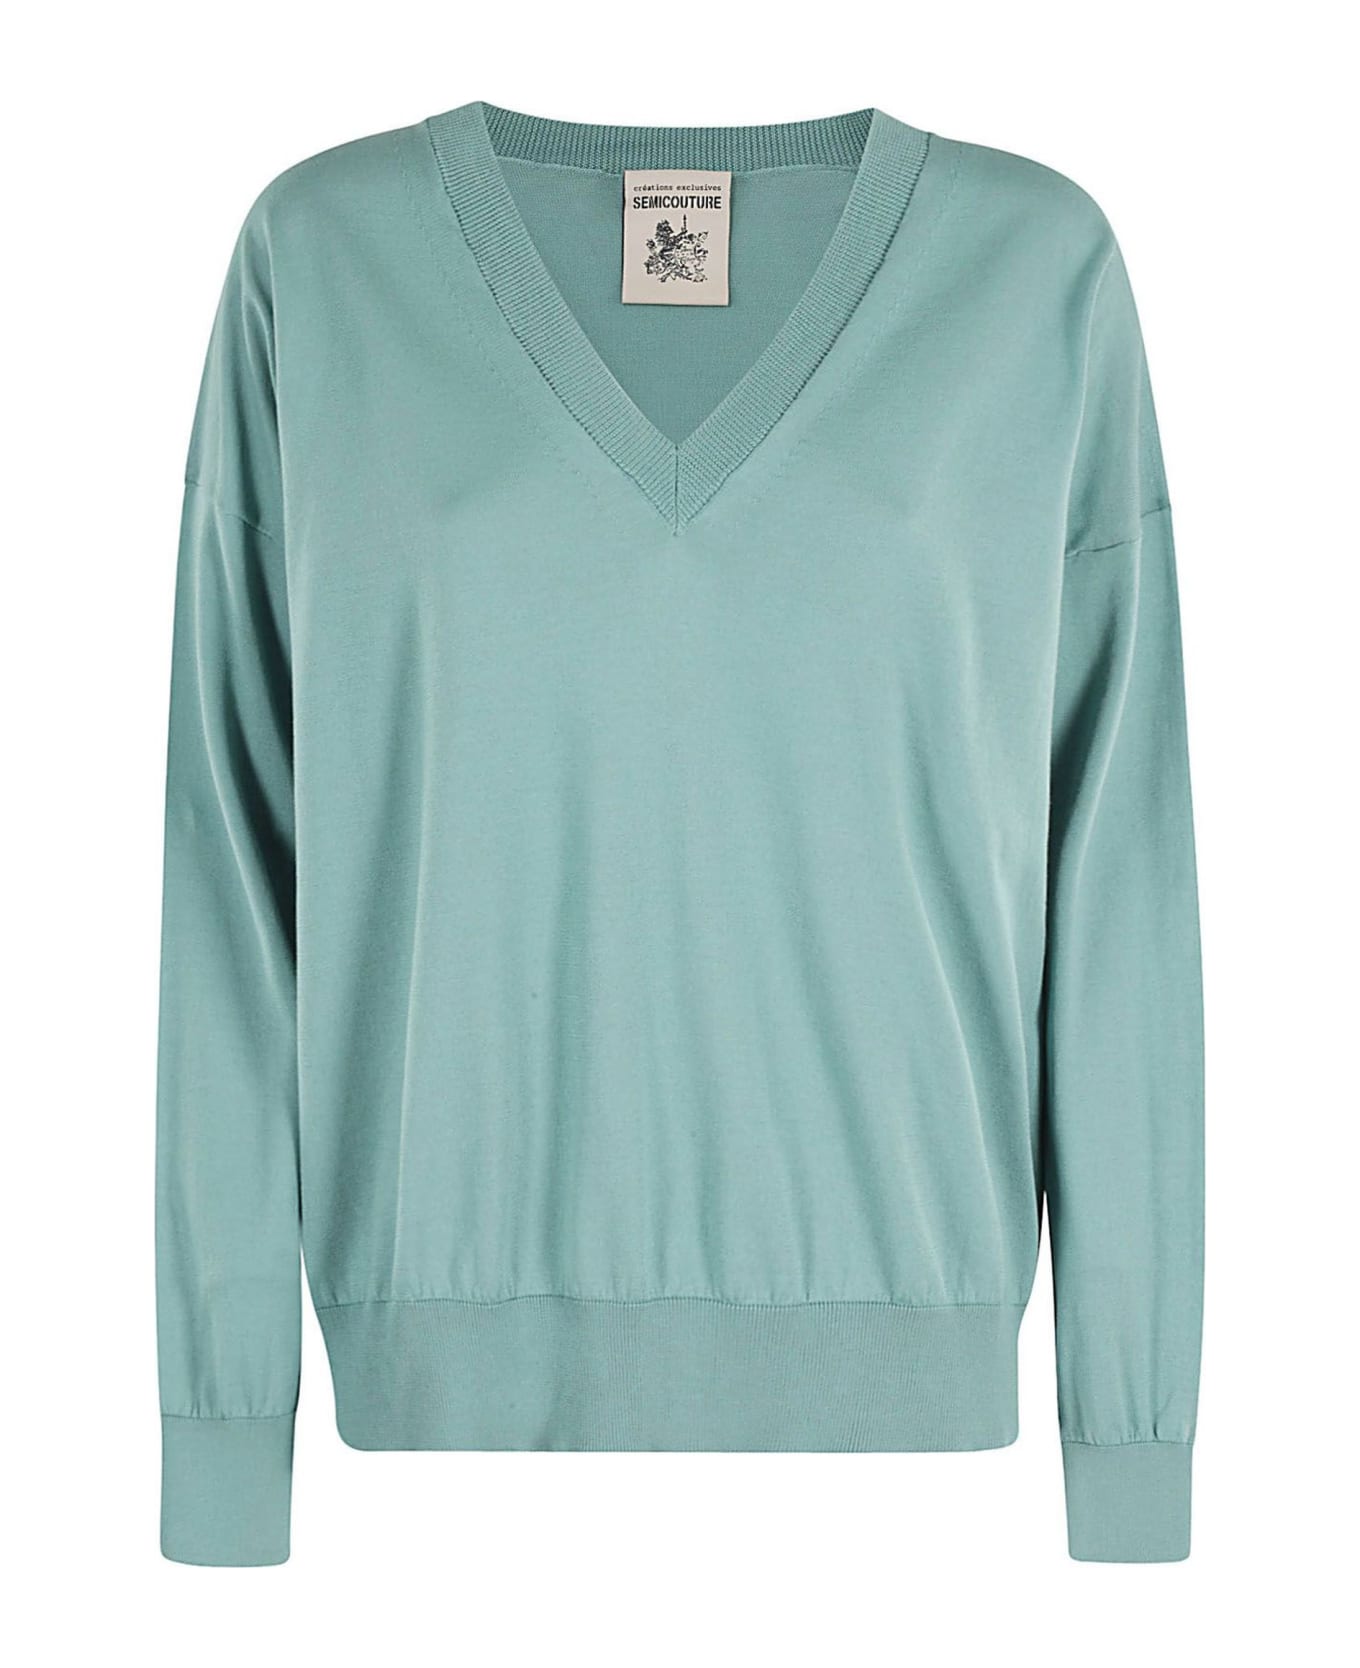 SEMICOUTURE Aquamarine Cotton Sweater - Green